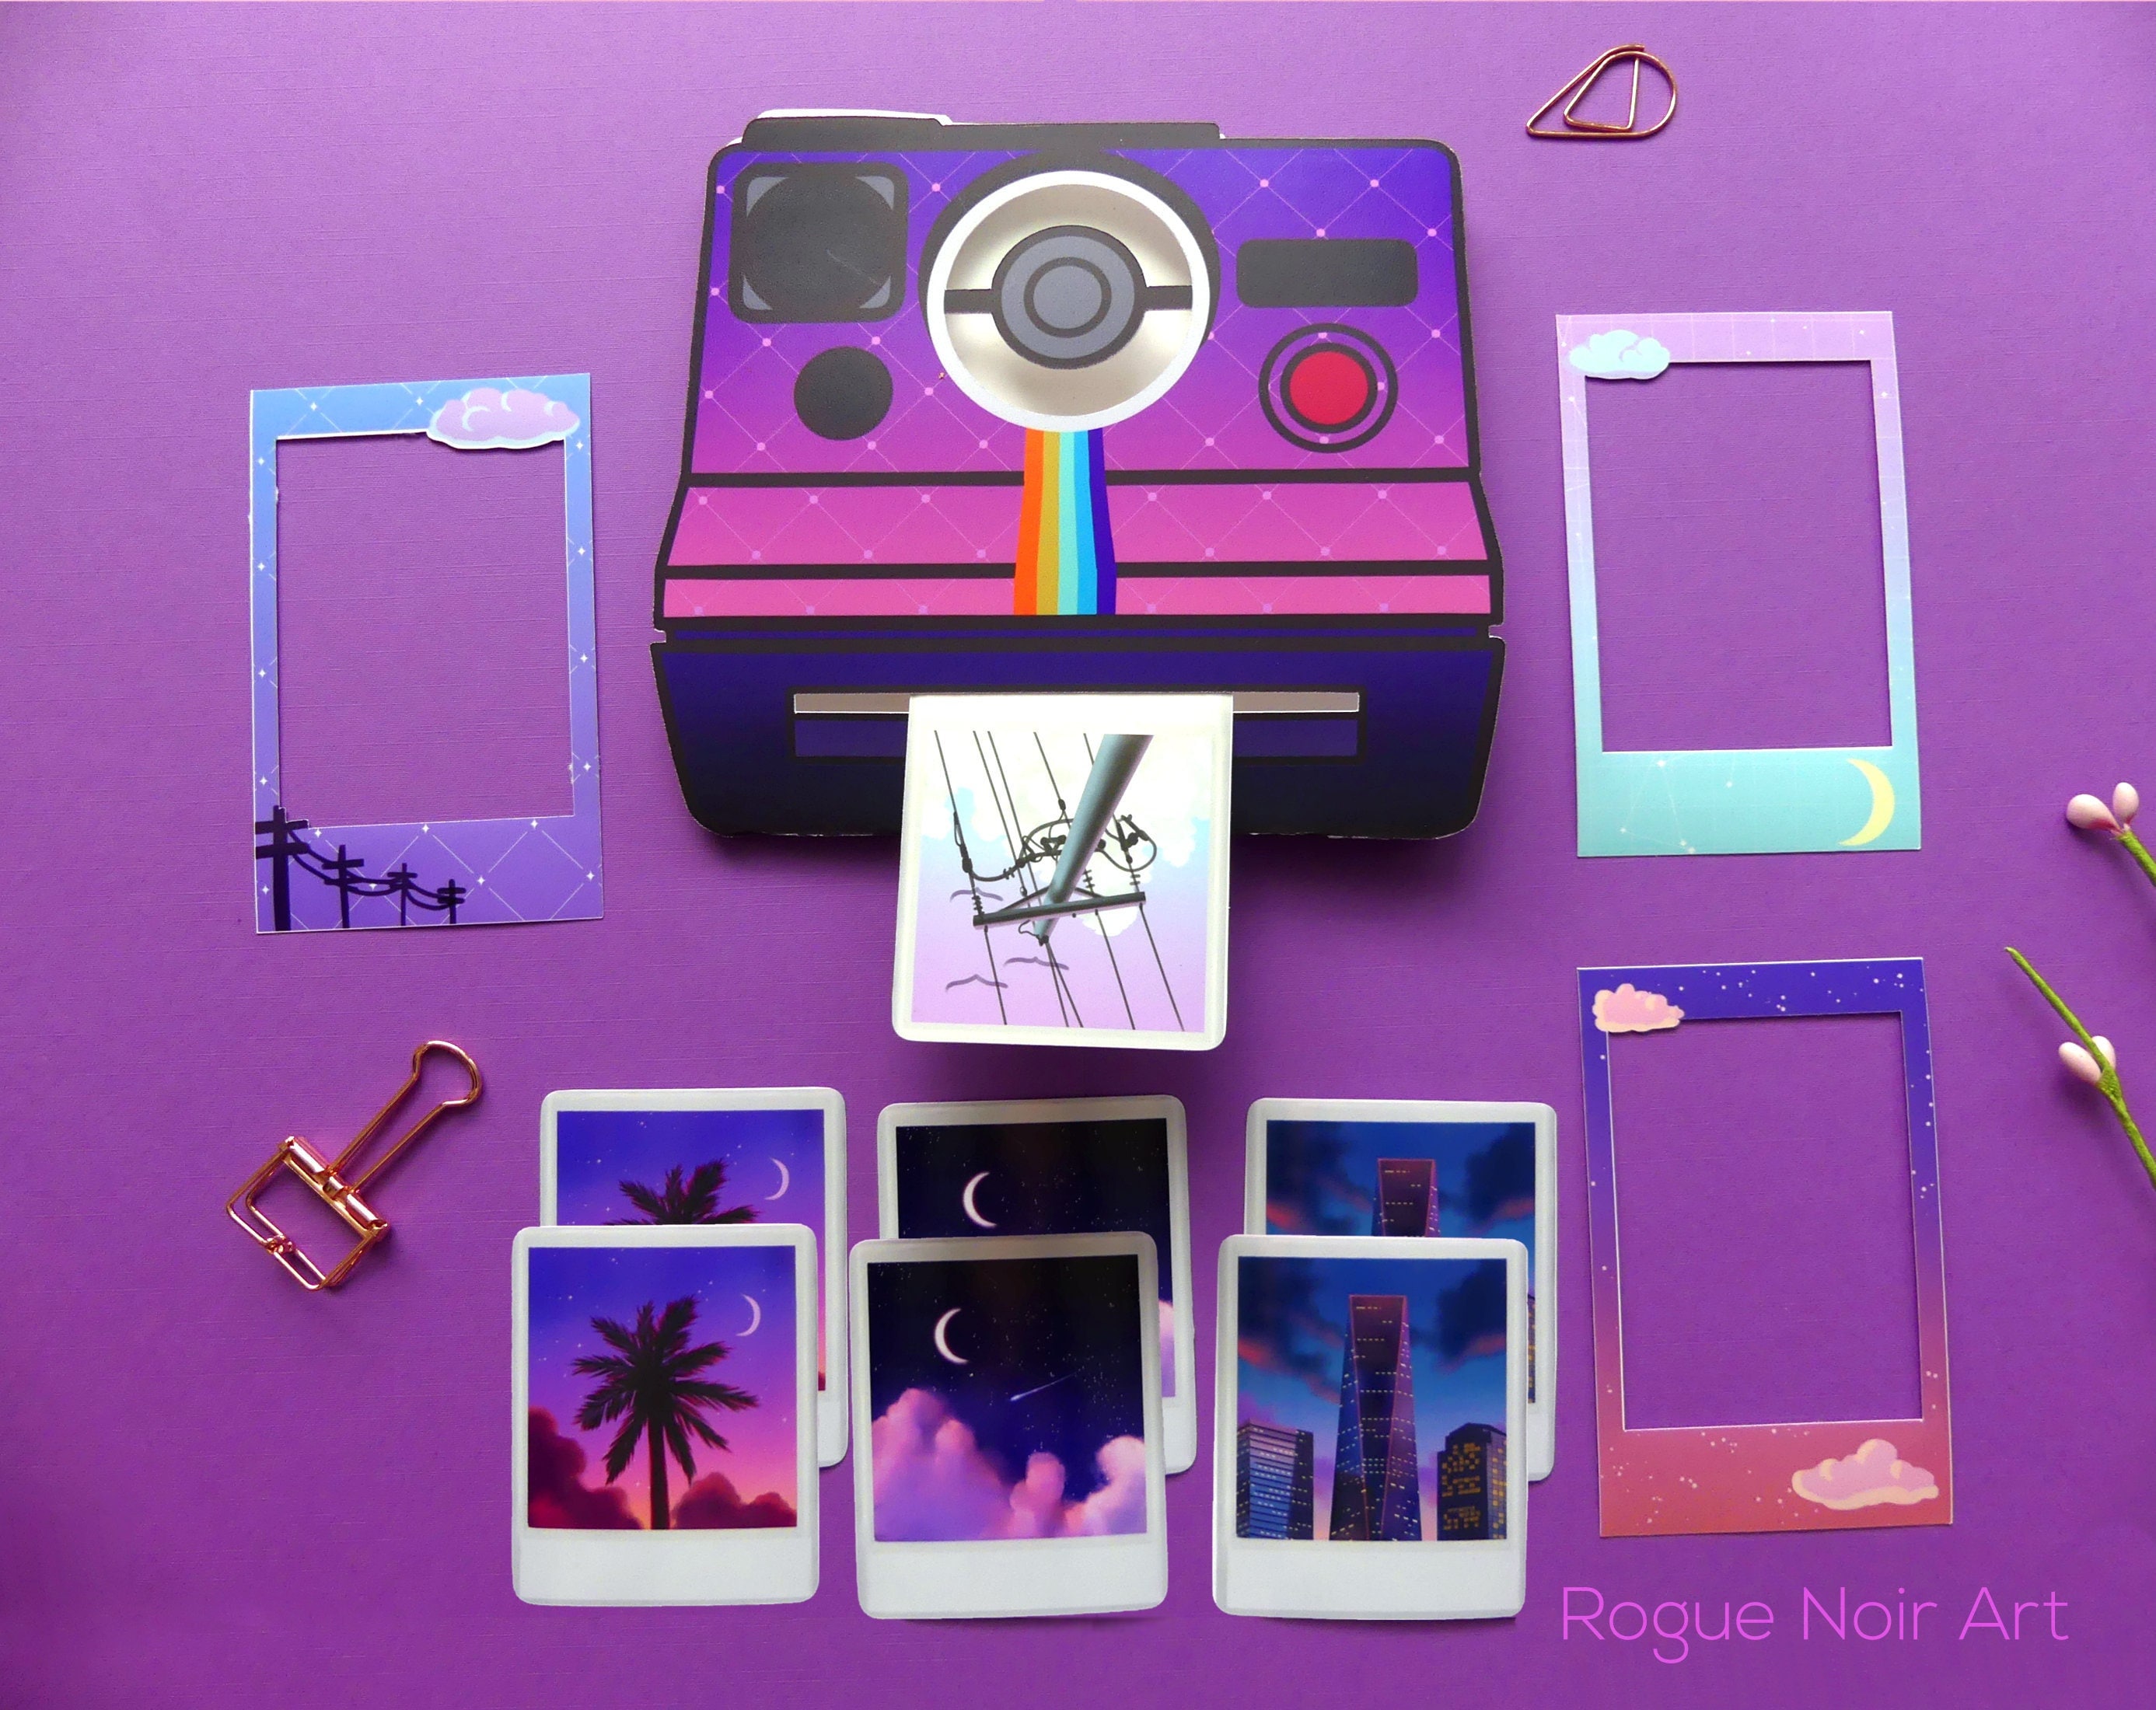 Instax Sticker Polaroid Stickers Memories 90s Themed -  Canada